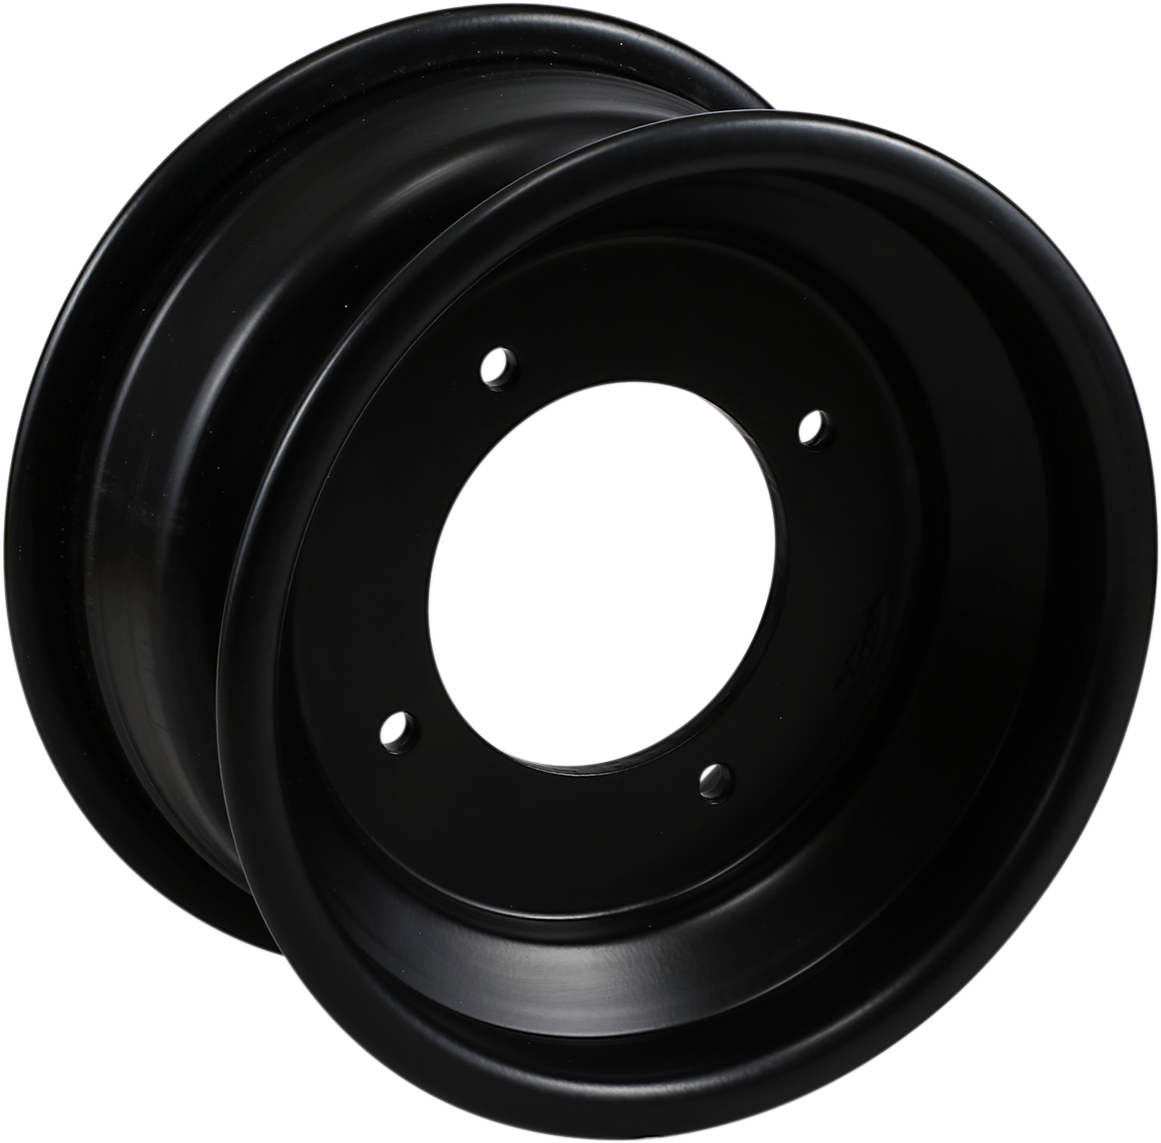 AMS Rolled-Lip Spun Wheel - Front - Black - 10x5 - 4/156 - 3+2 261RL105156B3